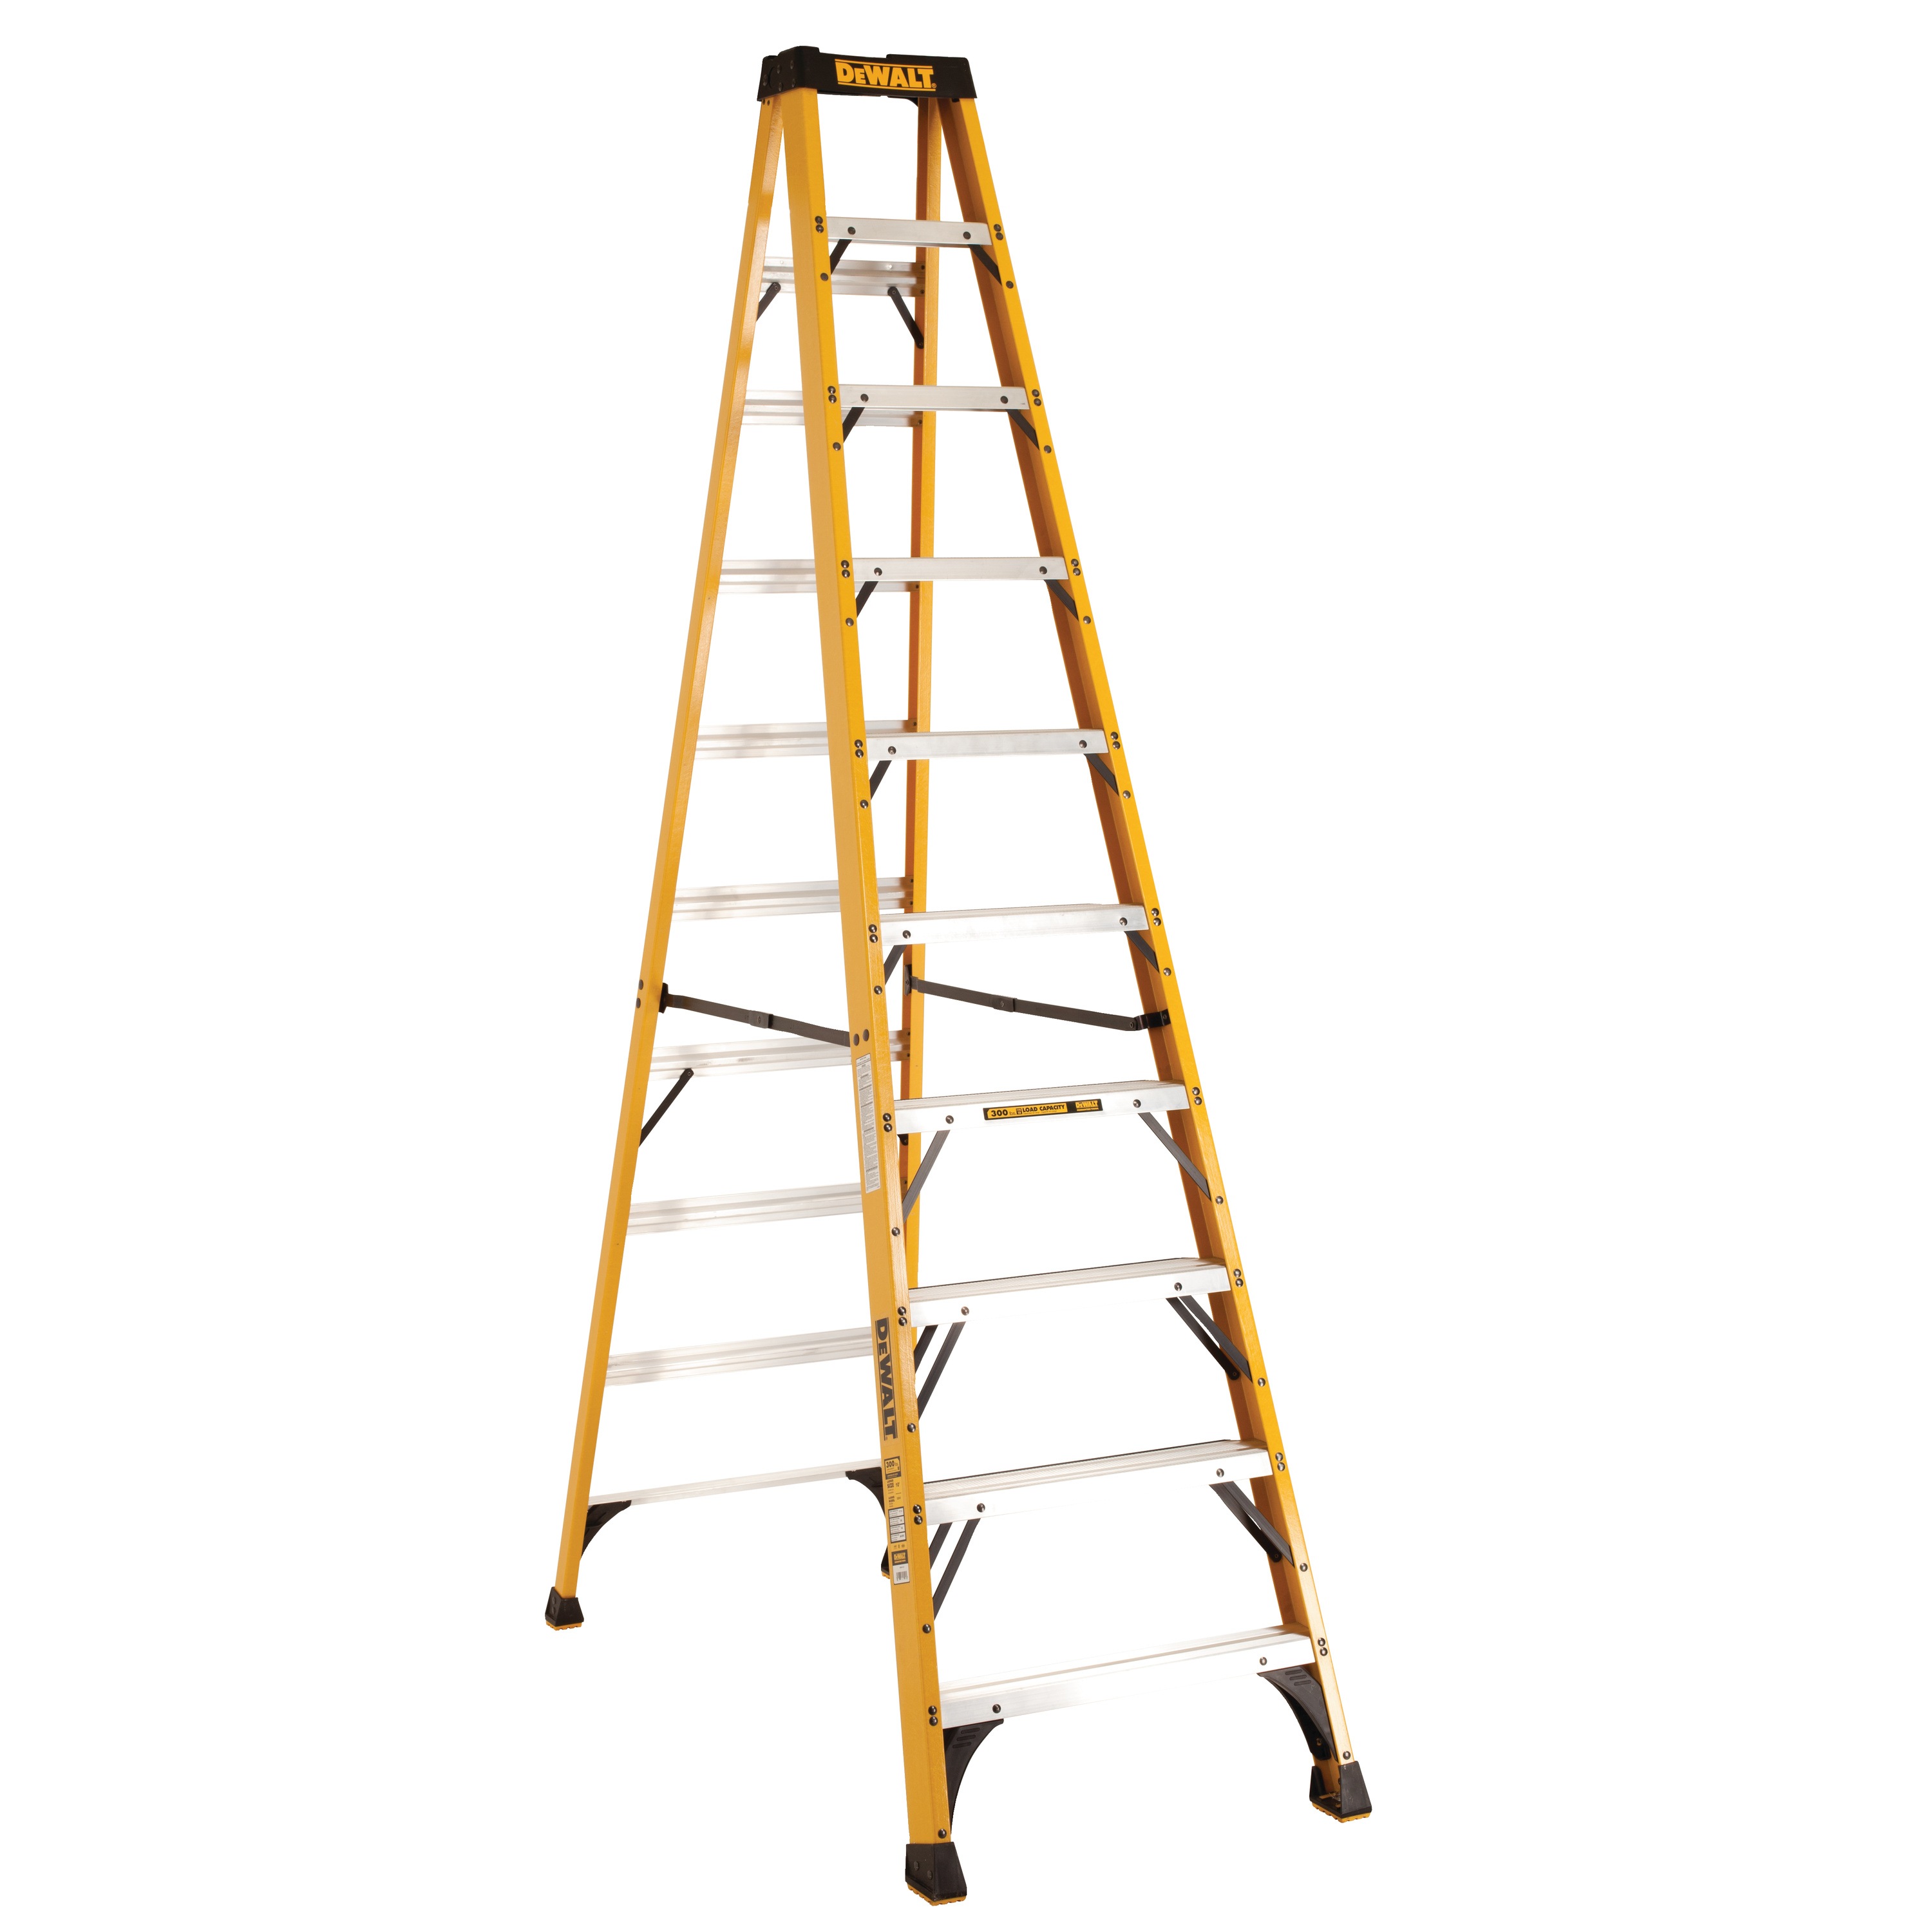 10 foot Fiberglass Step Ladder 300 pound Load Capacity.